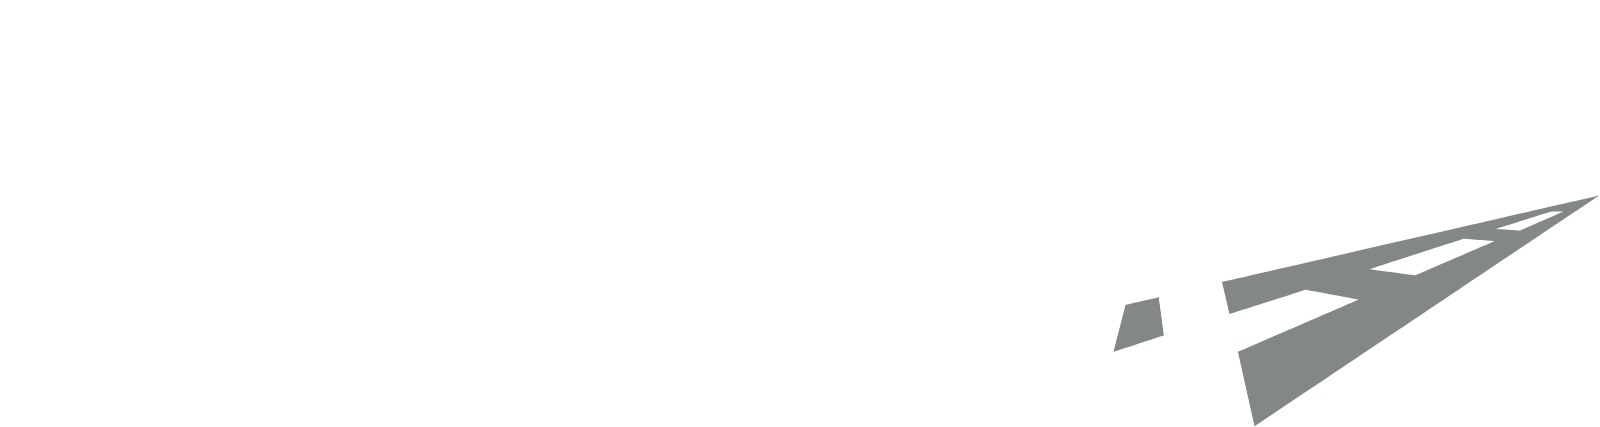 Atlas Arteria logo grand pour les fonds sombres (PNG transparent)